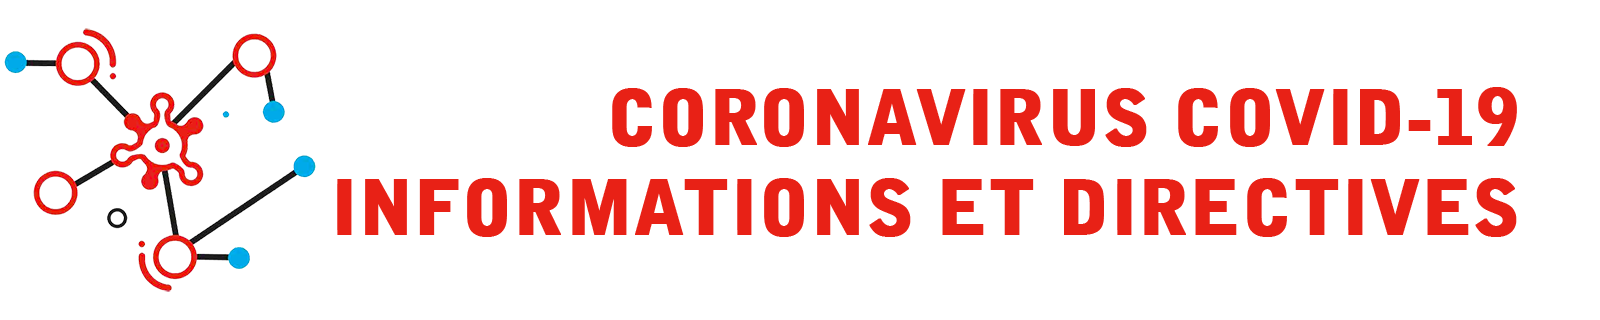 Coronavirus: Informations et directives